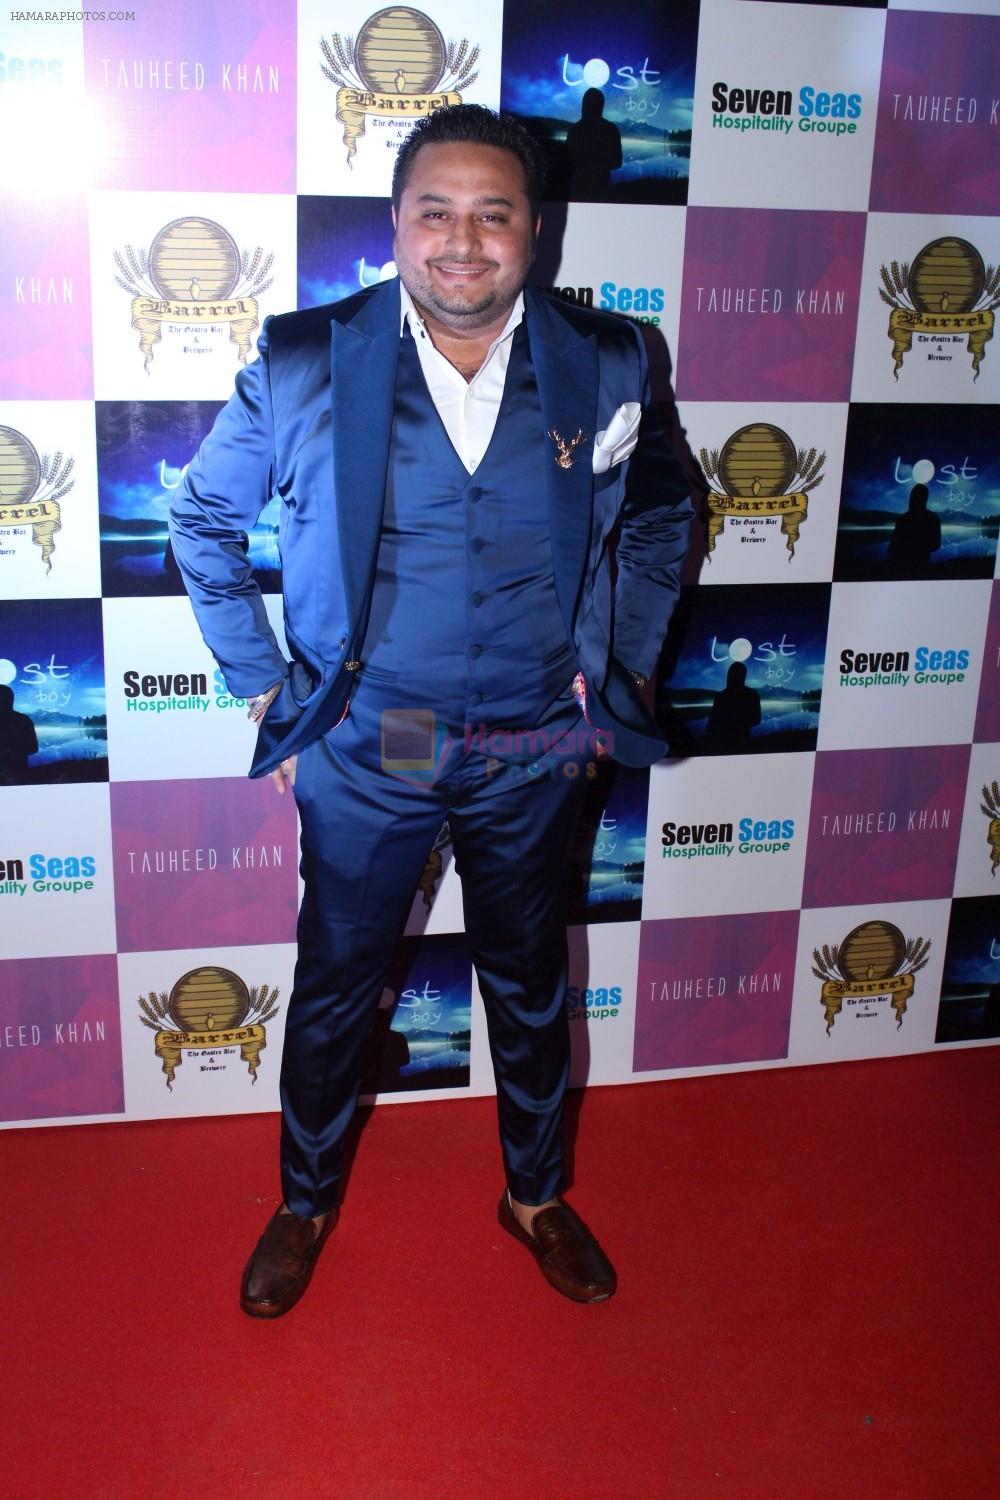 at Grand Red Carpet Birthday Party Of Producer Vikas Gupta on 7th May 2017